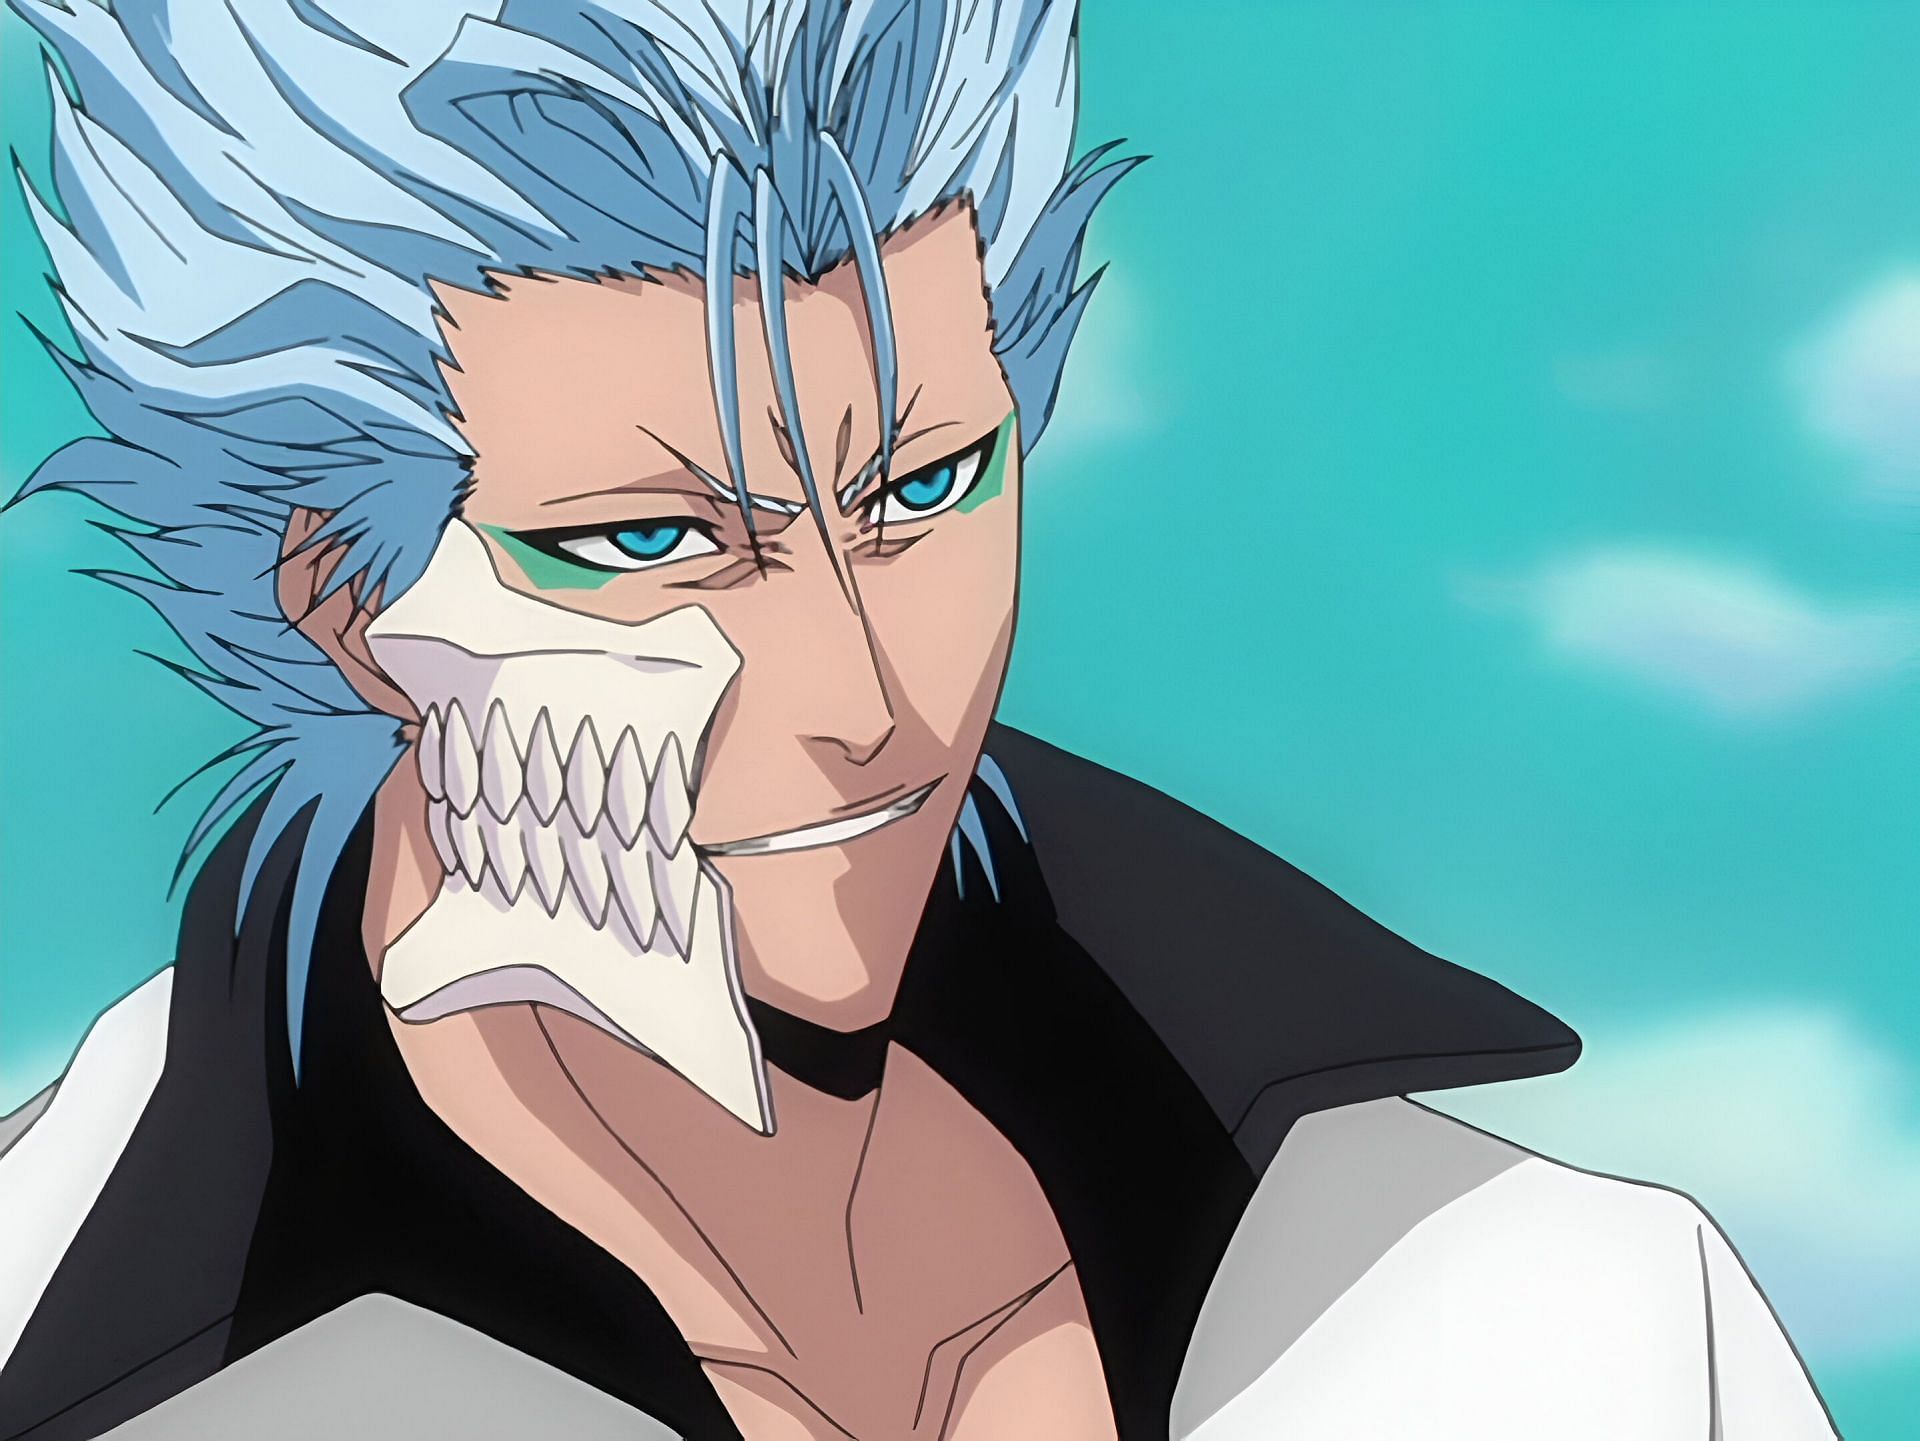 Grimmjow Jaegerjaquez as seen in the Bleach anime (Image via Studio Pierrot)